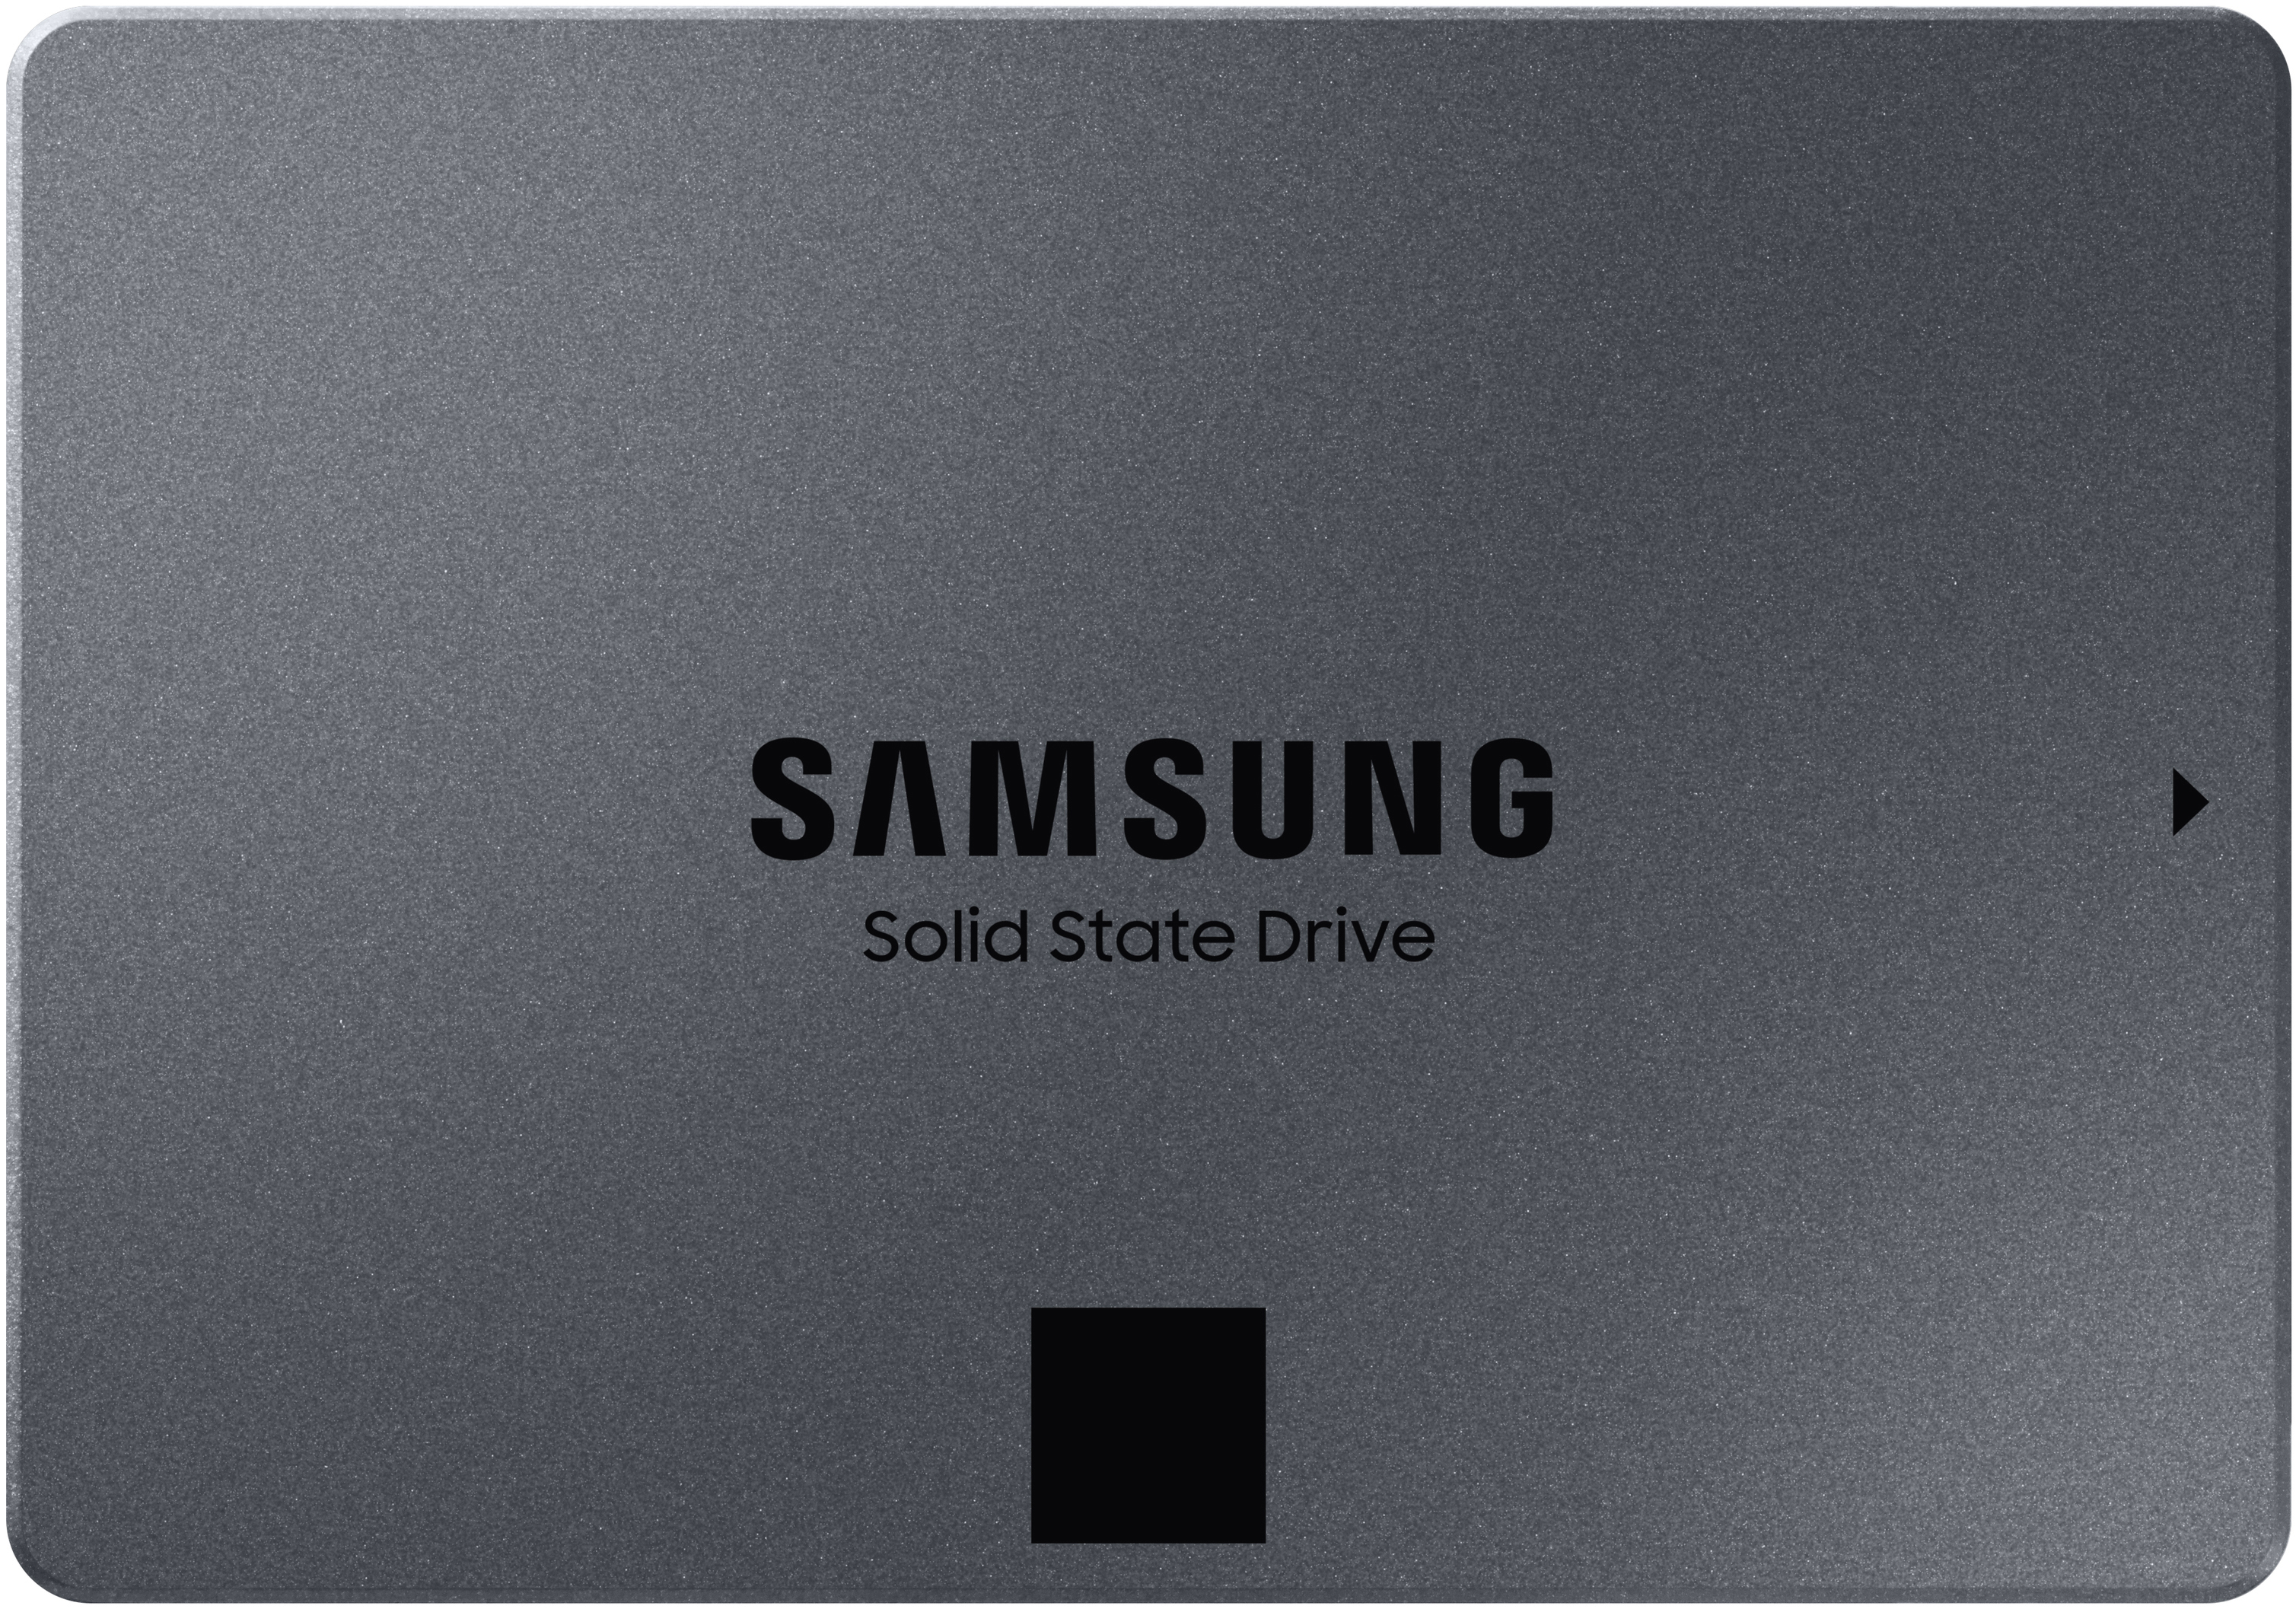 Gbps, 6 TB 4 SATA 860 SSD Zoll, intern Festplatte, SAMSUNG 2,5 QVO